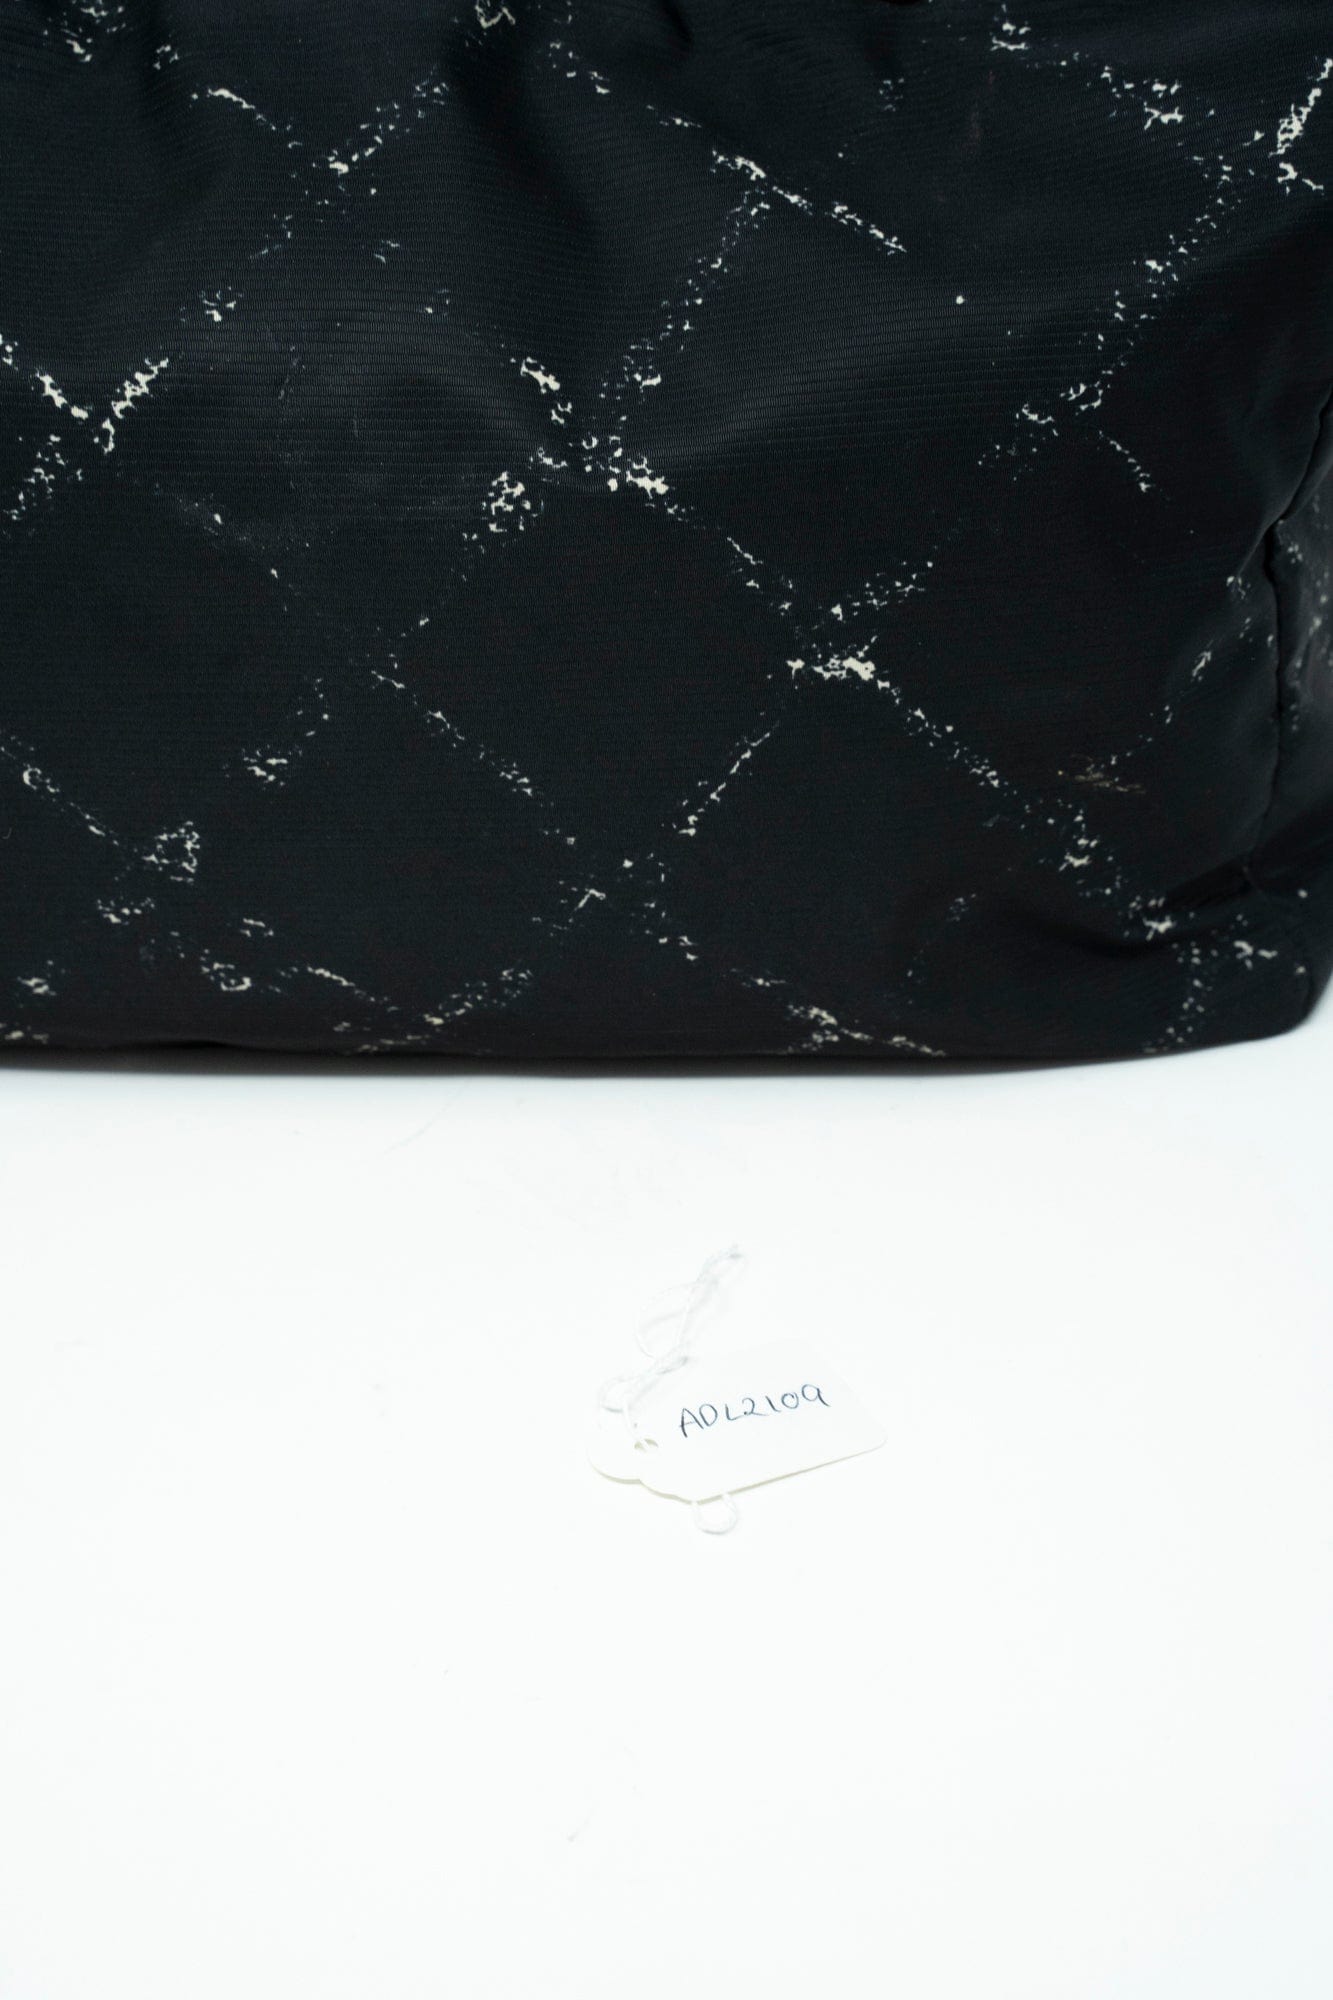 Chanel Chanel Black Travel line handbag  ADL2109